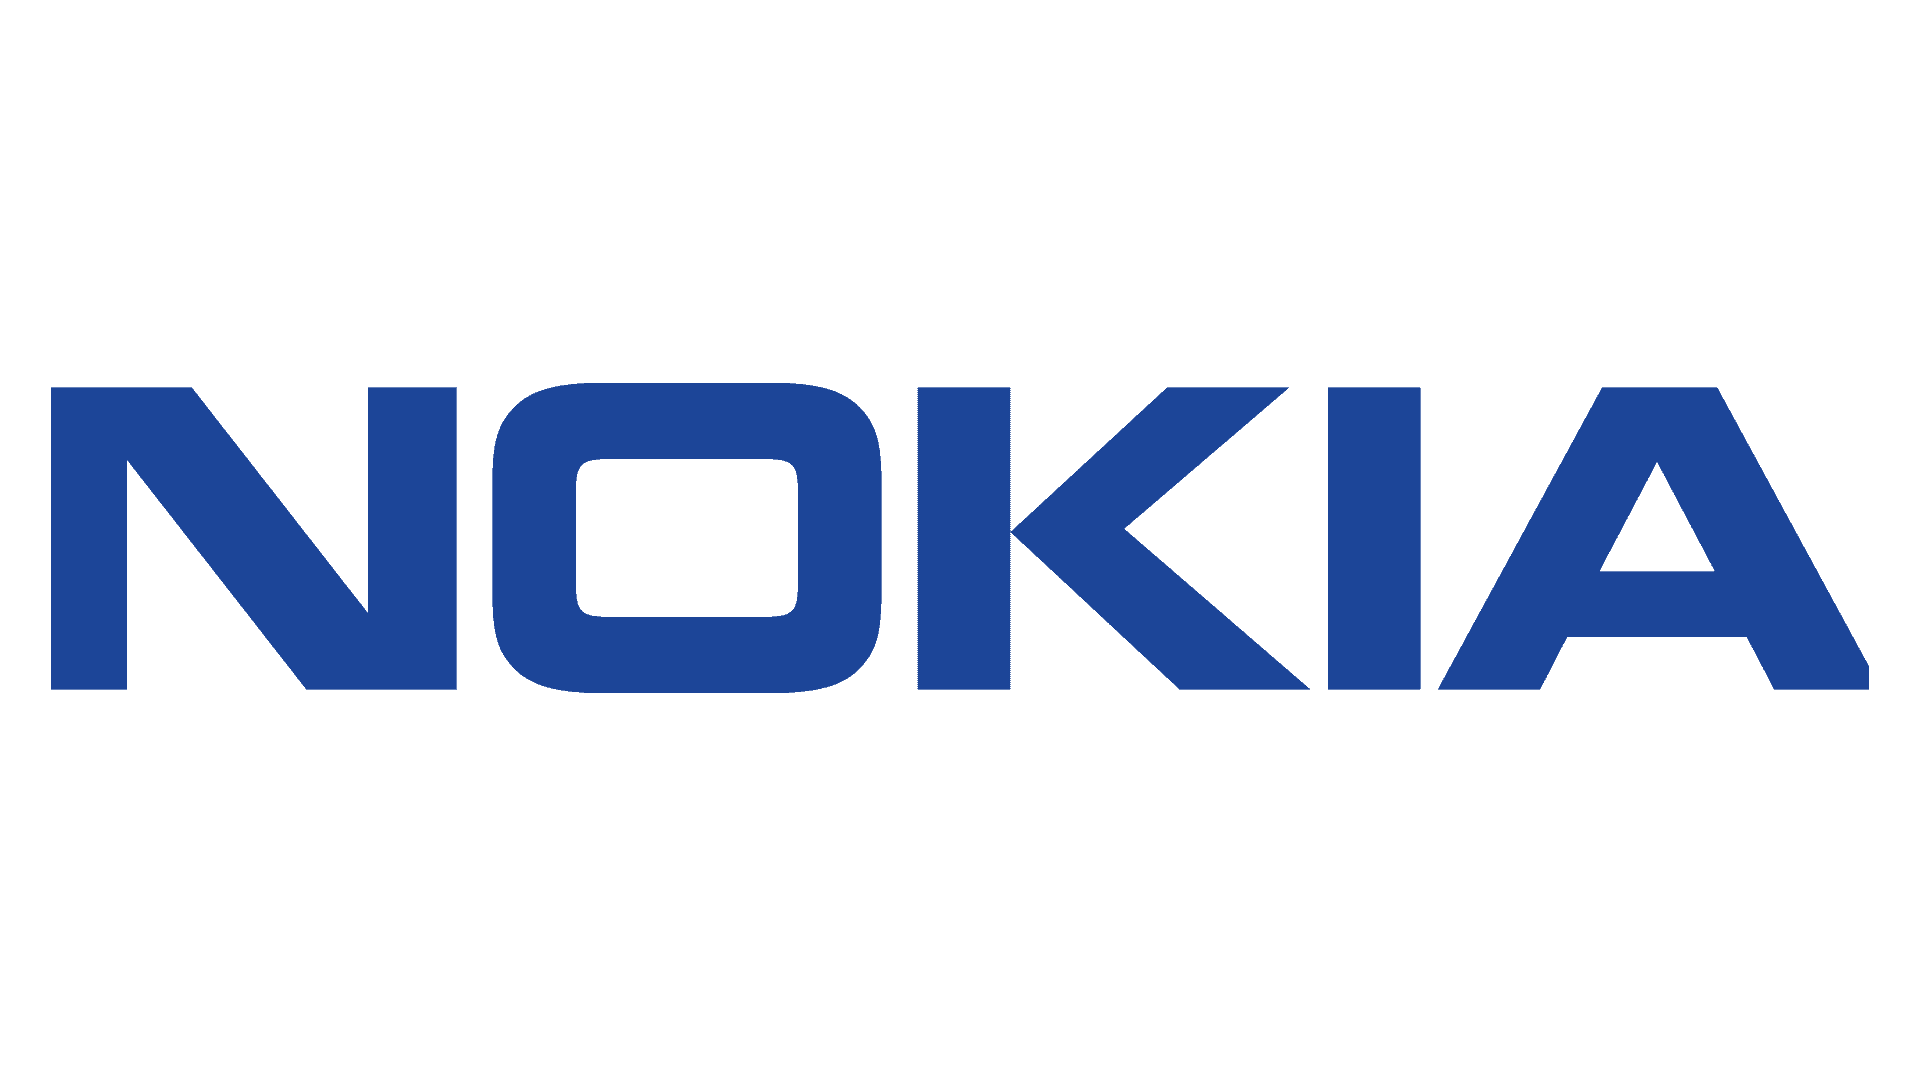 Nokia Covers